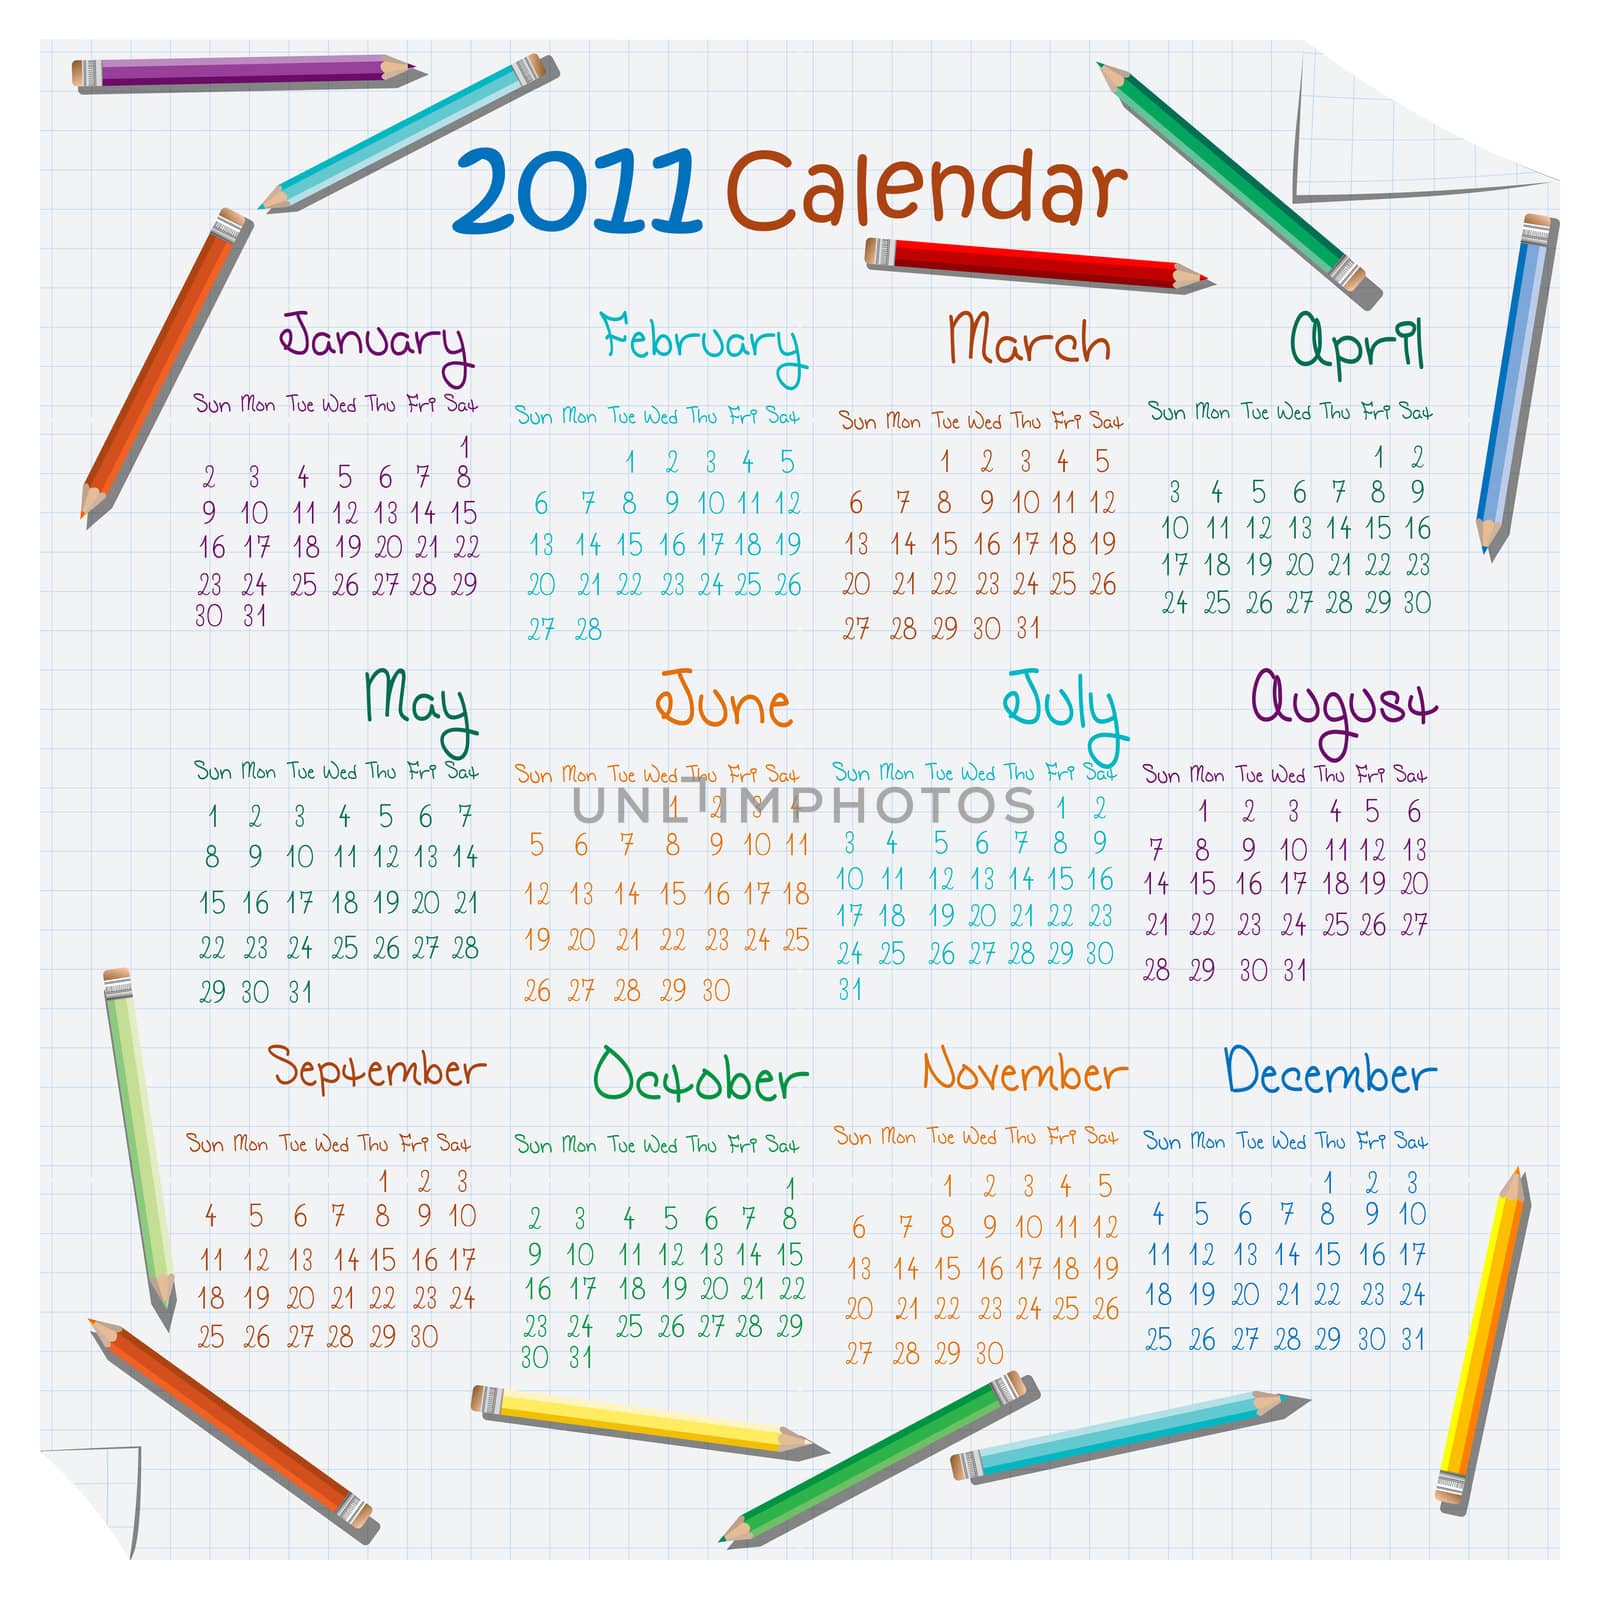 2011 calendar by Lirch